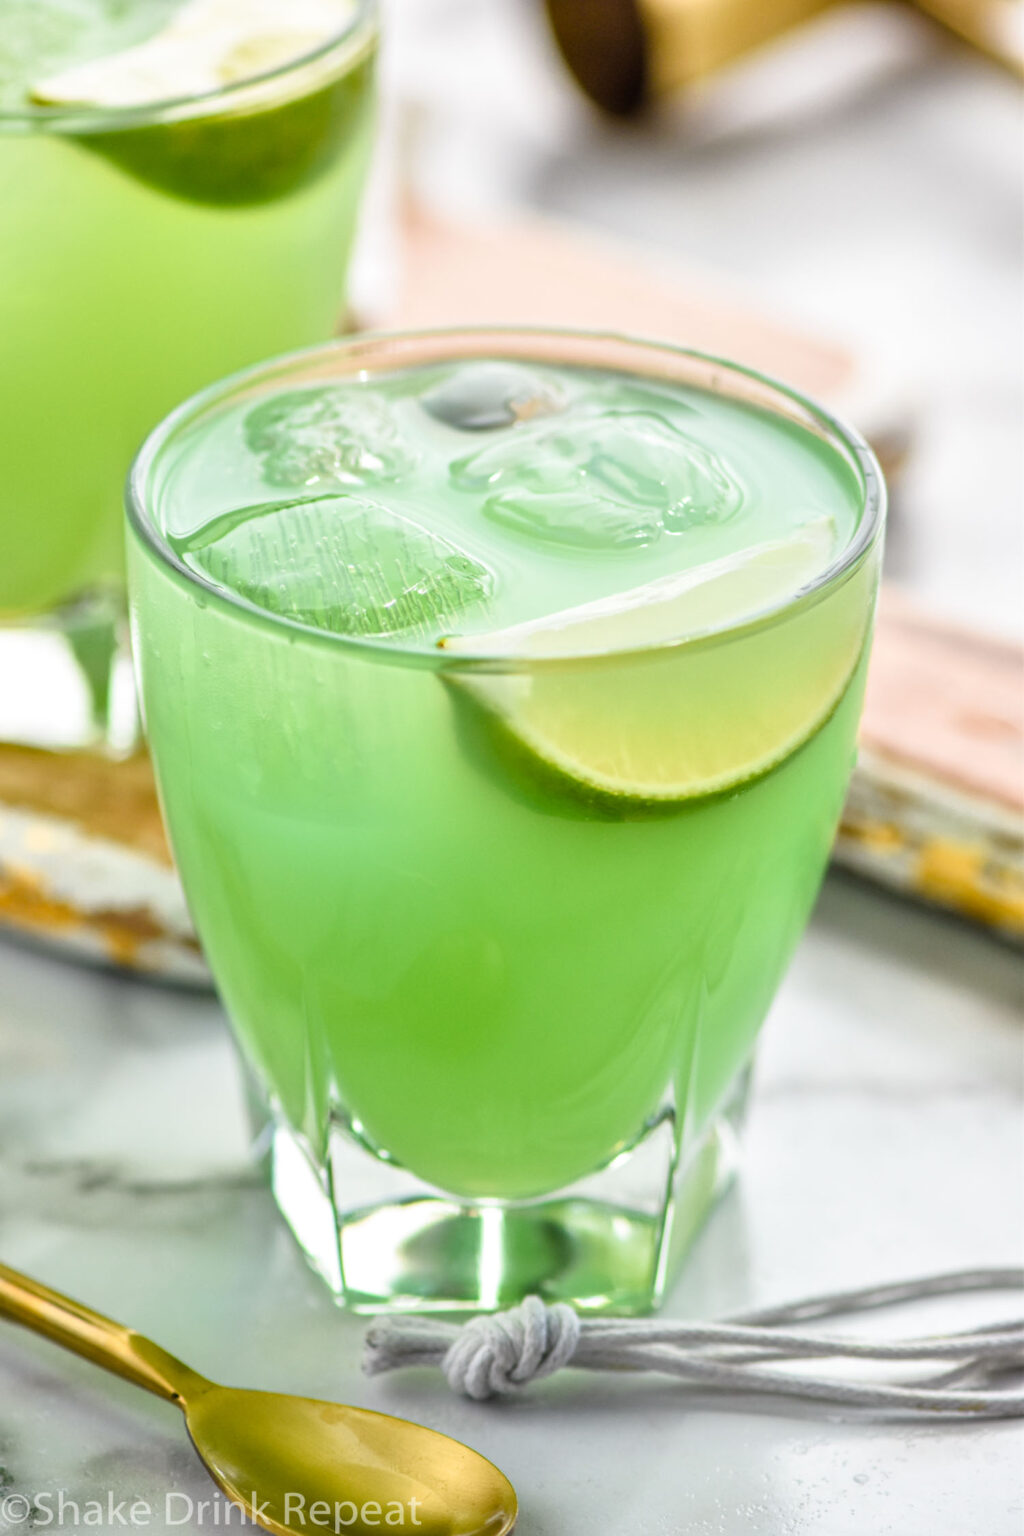 Incredible Hulk Drink - Shake Drink Repeat